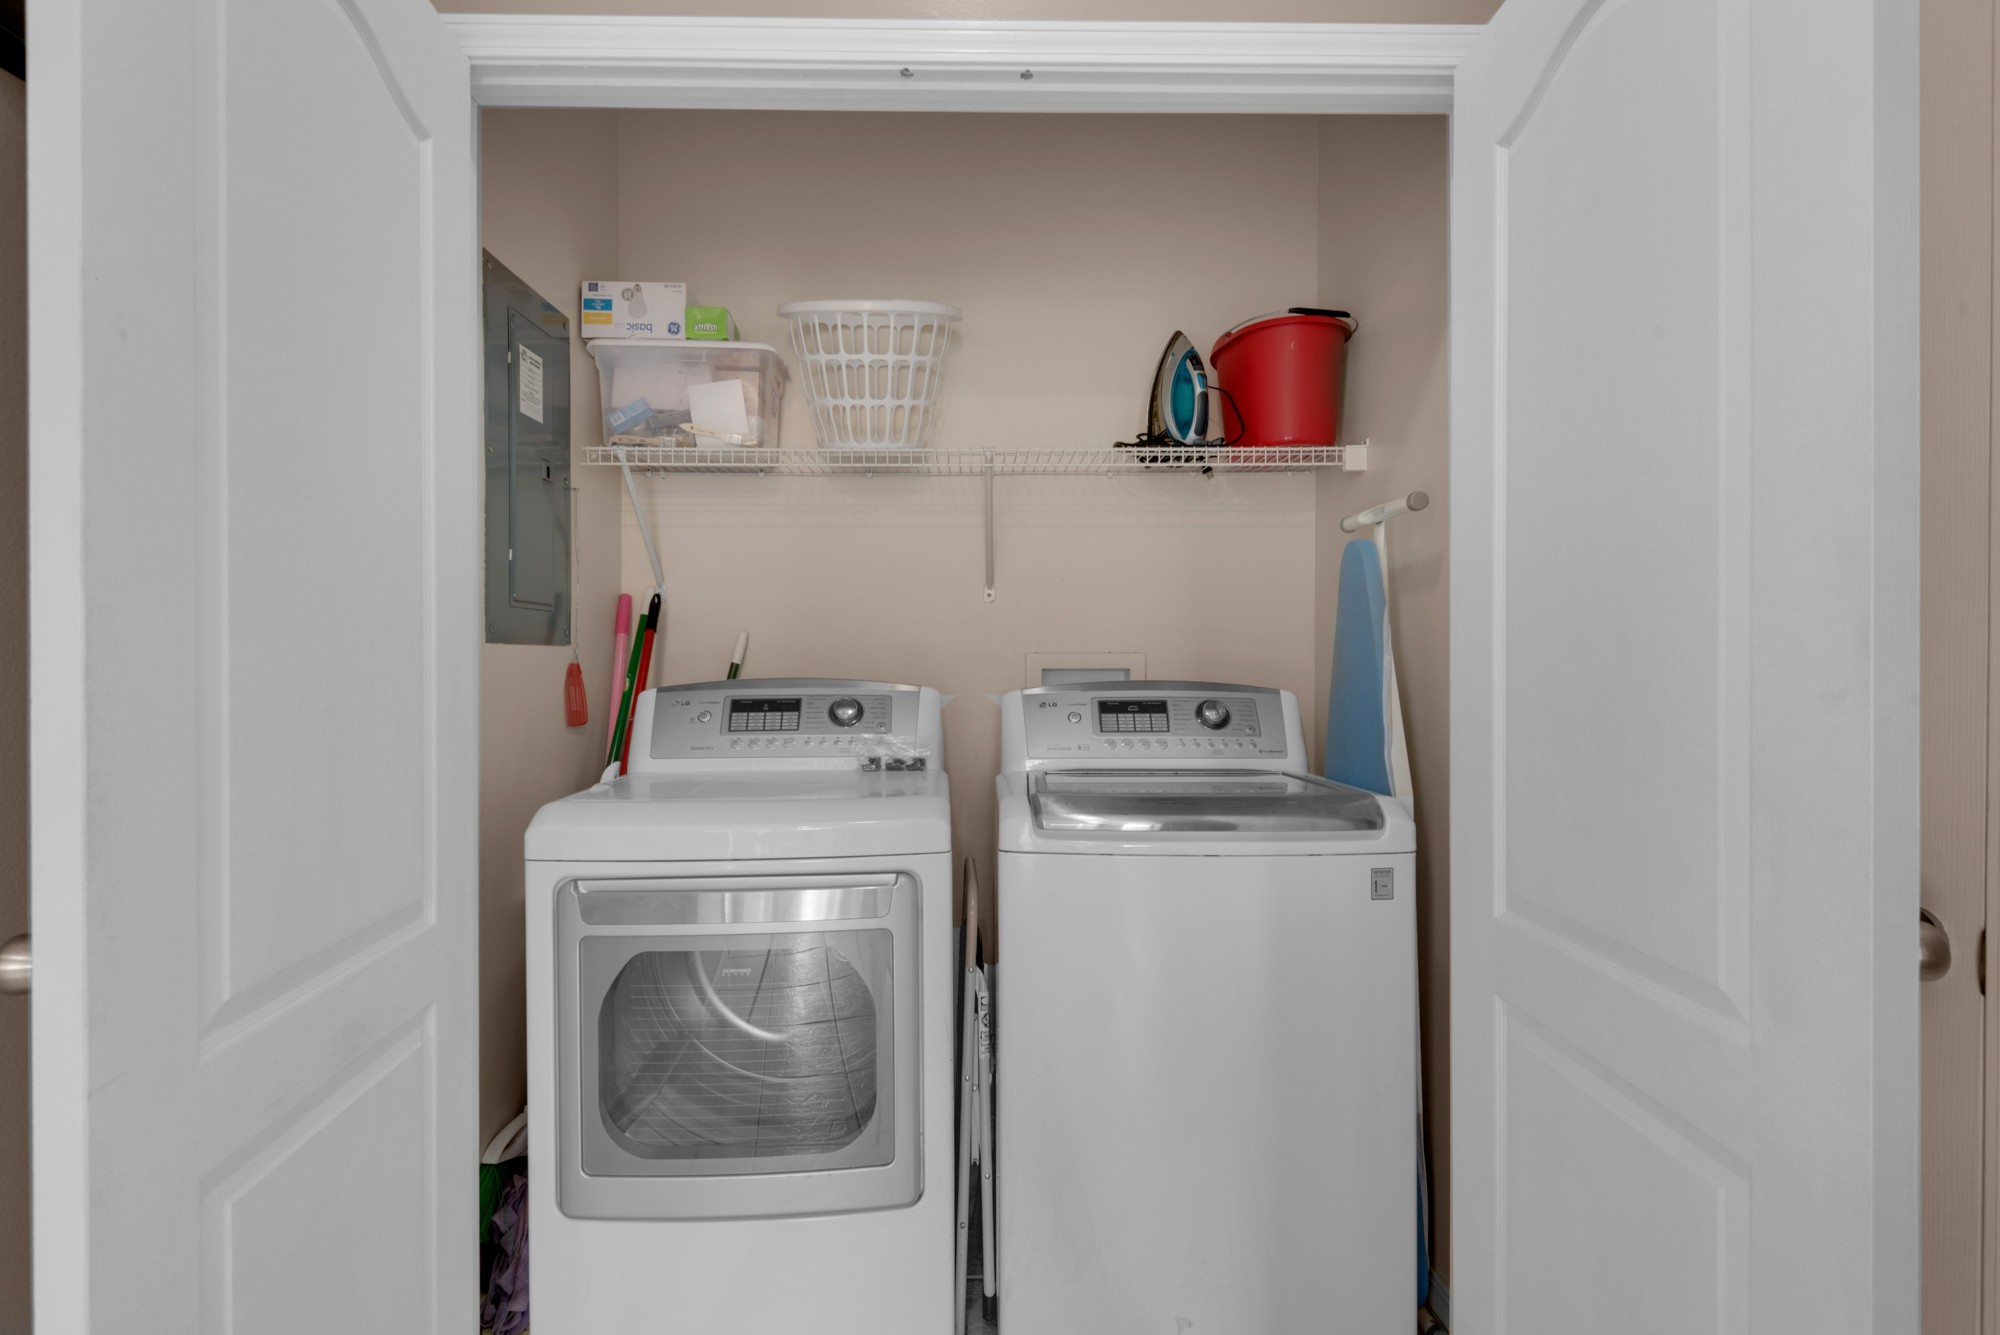 Laundry area features high efficiency appliances